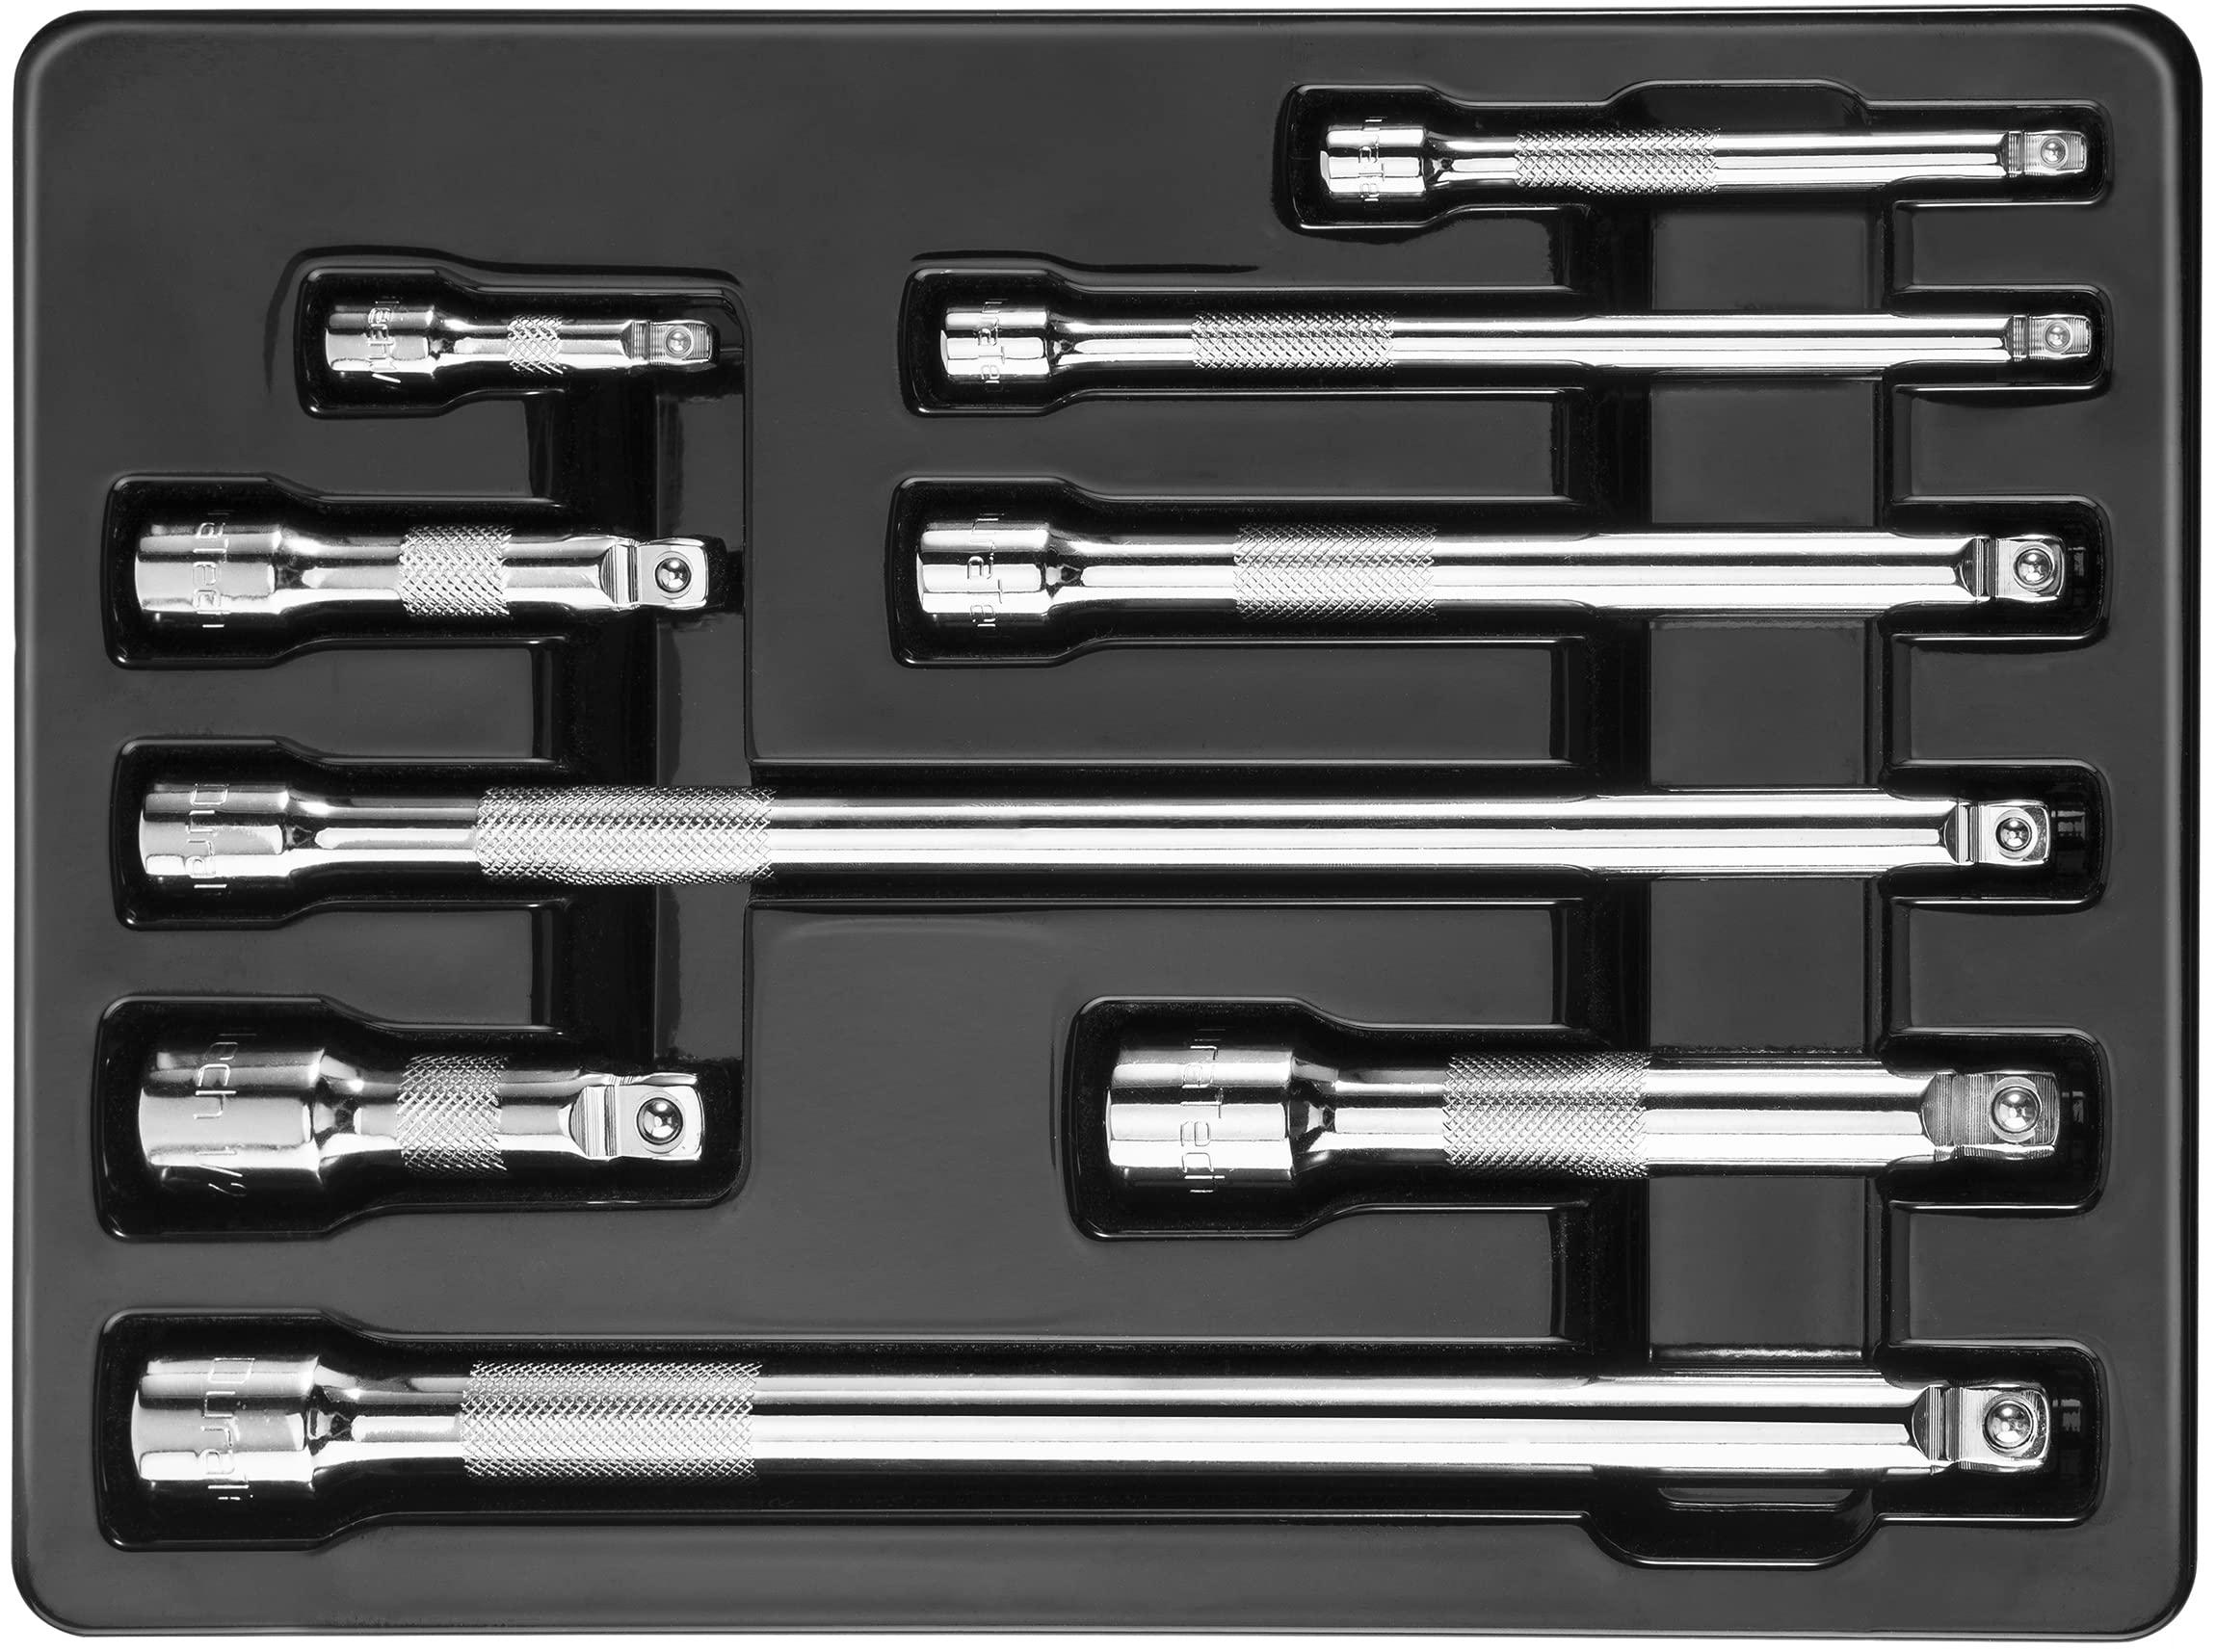 duratech wobble socket extension bar set, 1/4", 3/8", 1/2" drive socket extension set, cr-v steel, chrome plated, storage tra